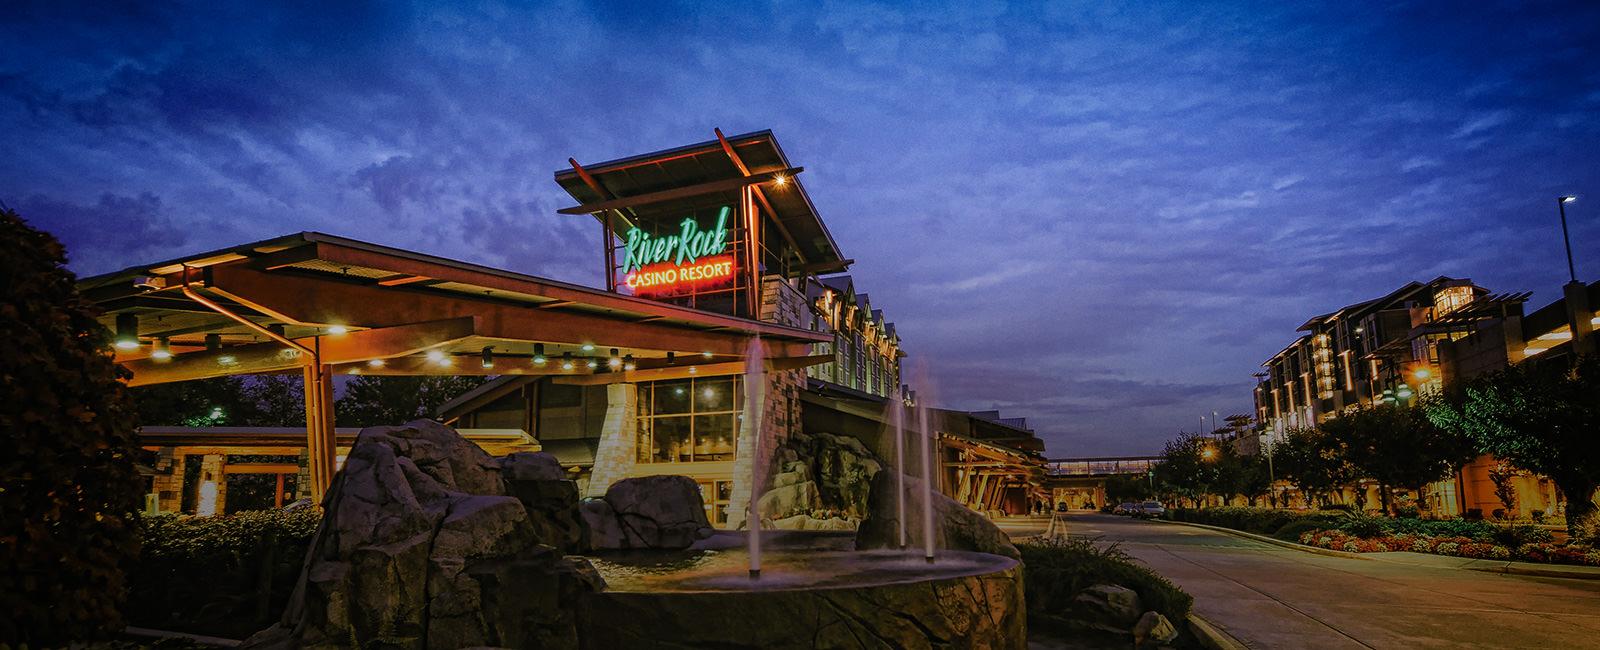 restaurants near river rock casino